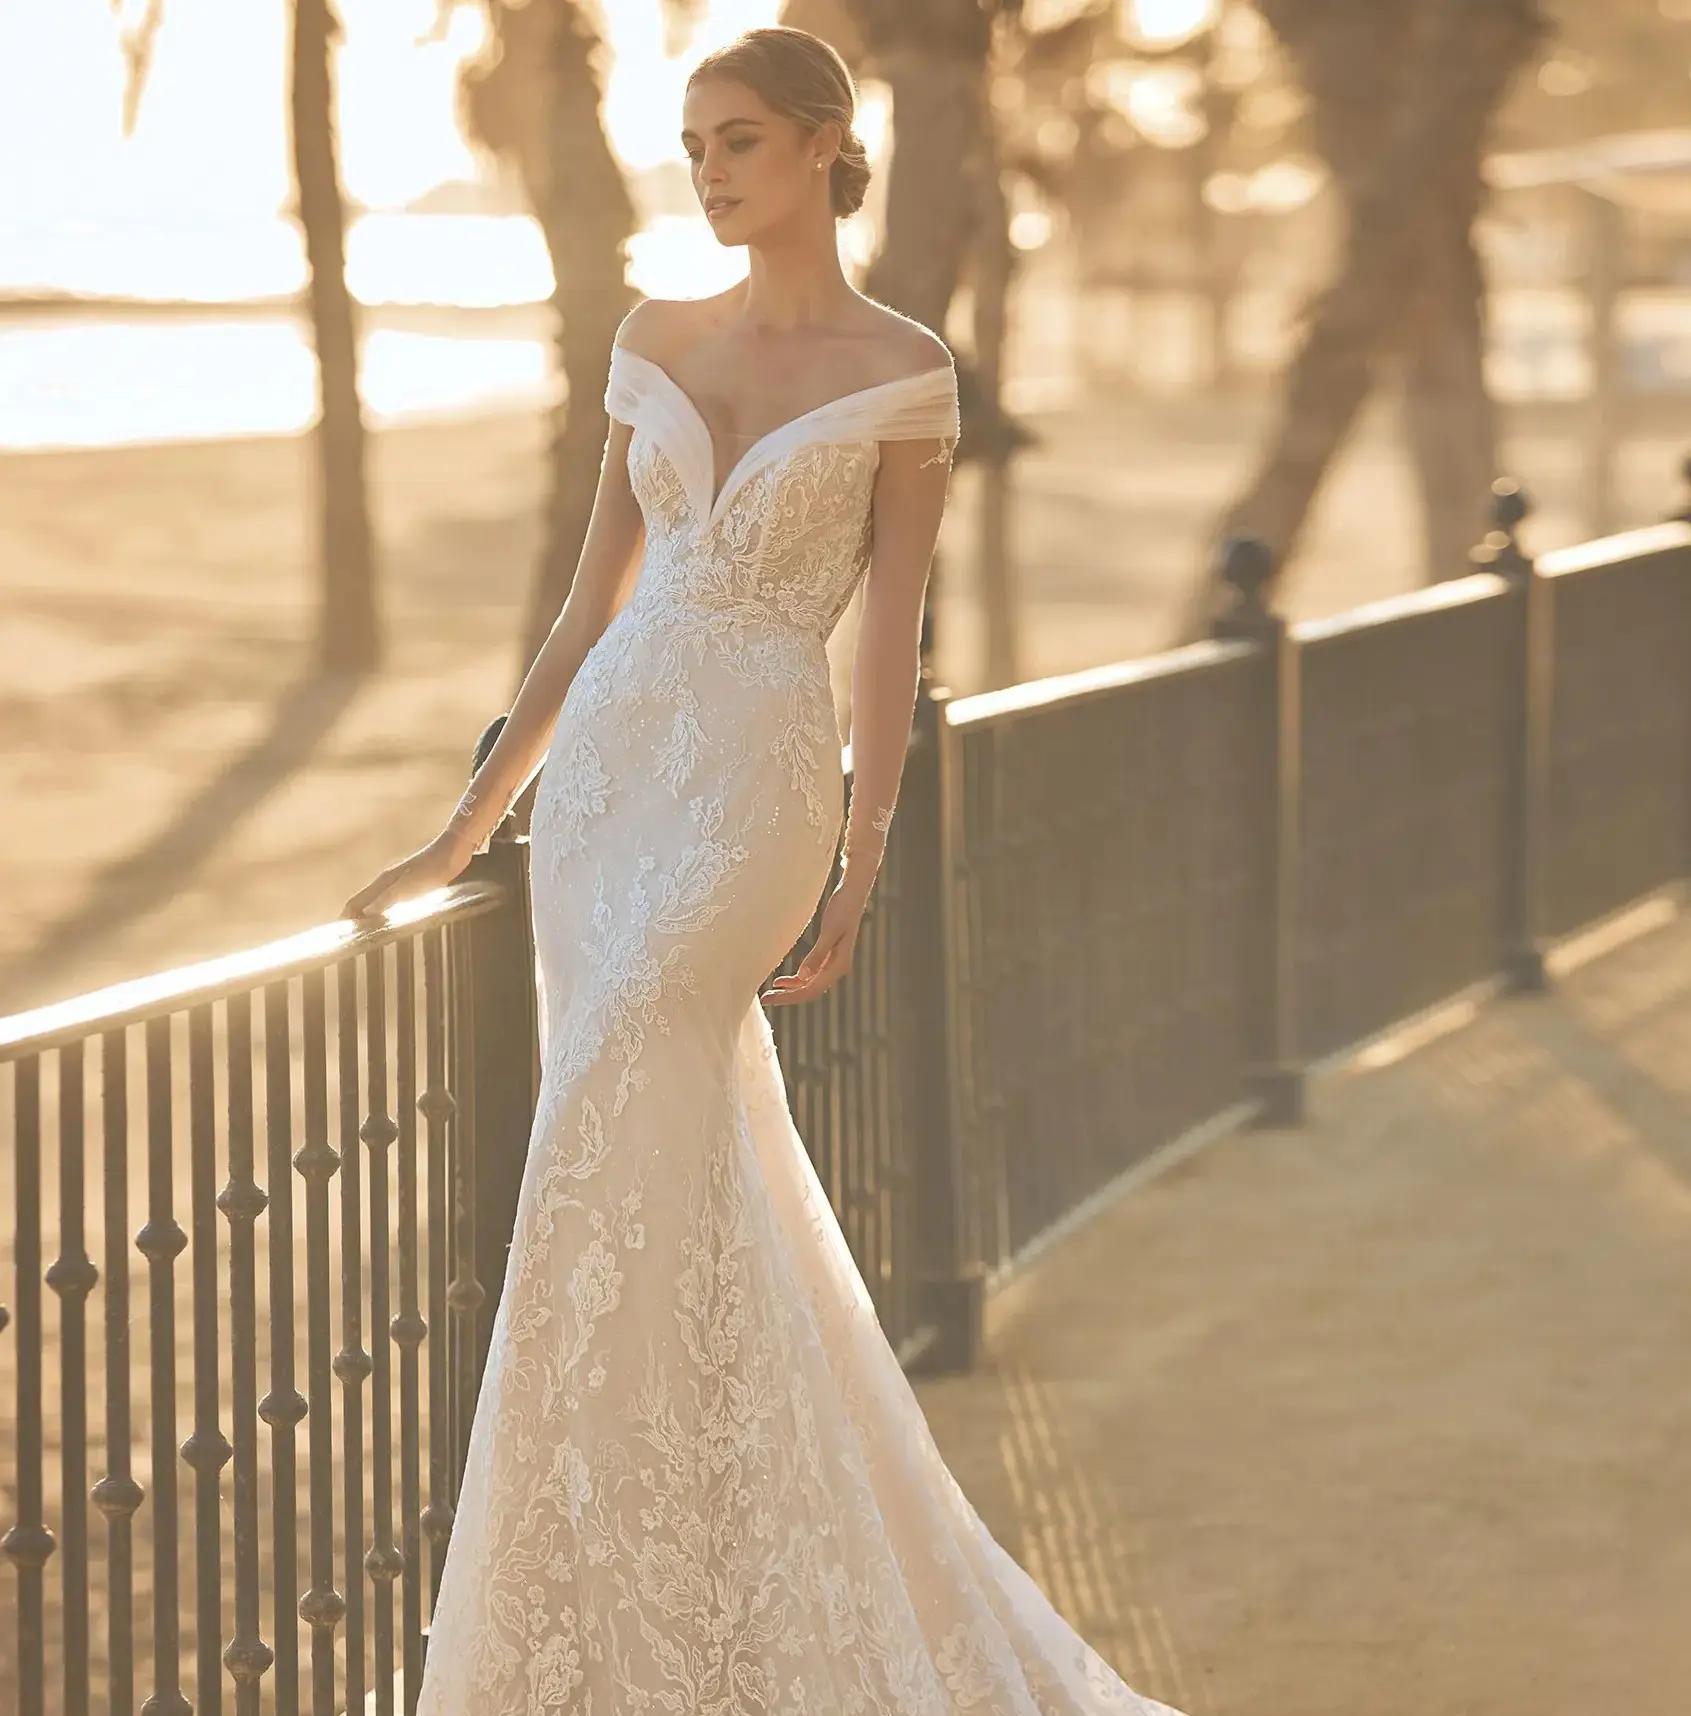 Romantic Lace Wedding Dresses: Feminine and Delicate Bridal Styles Image